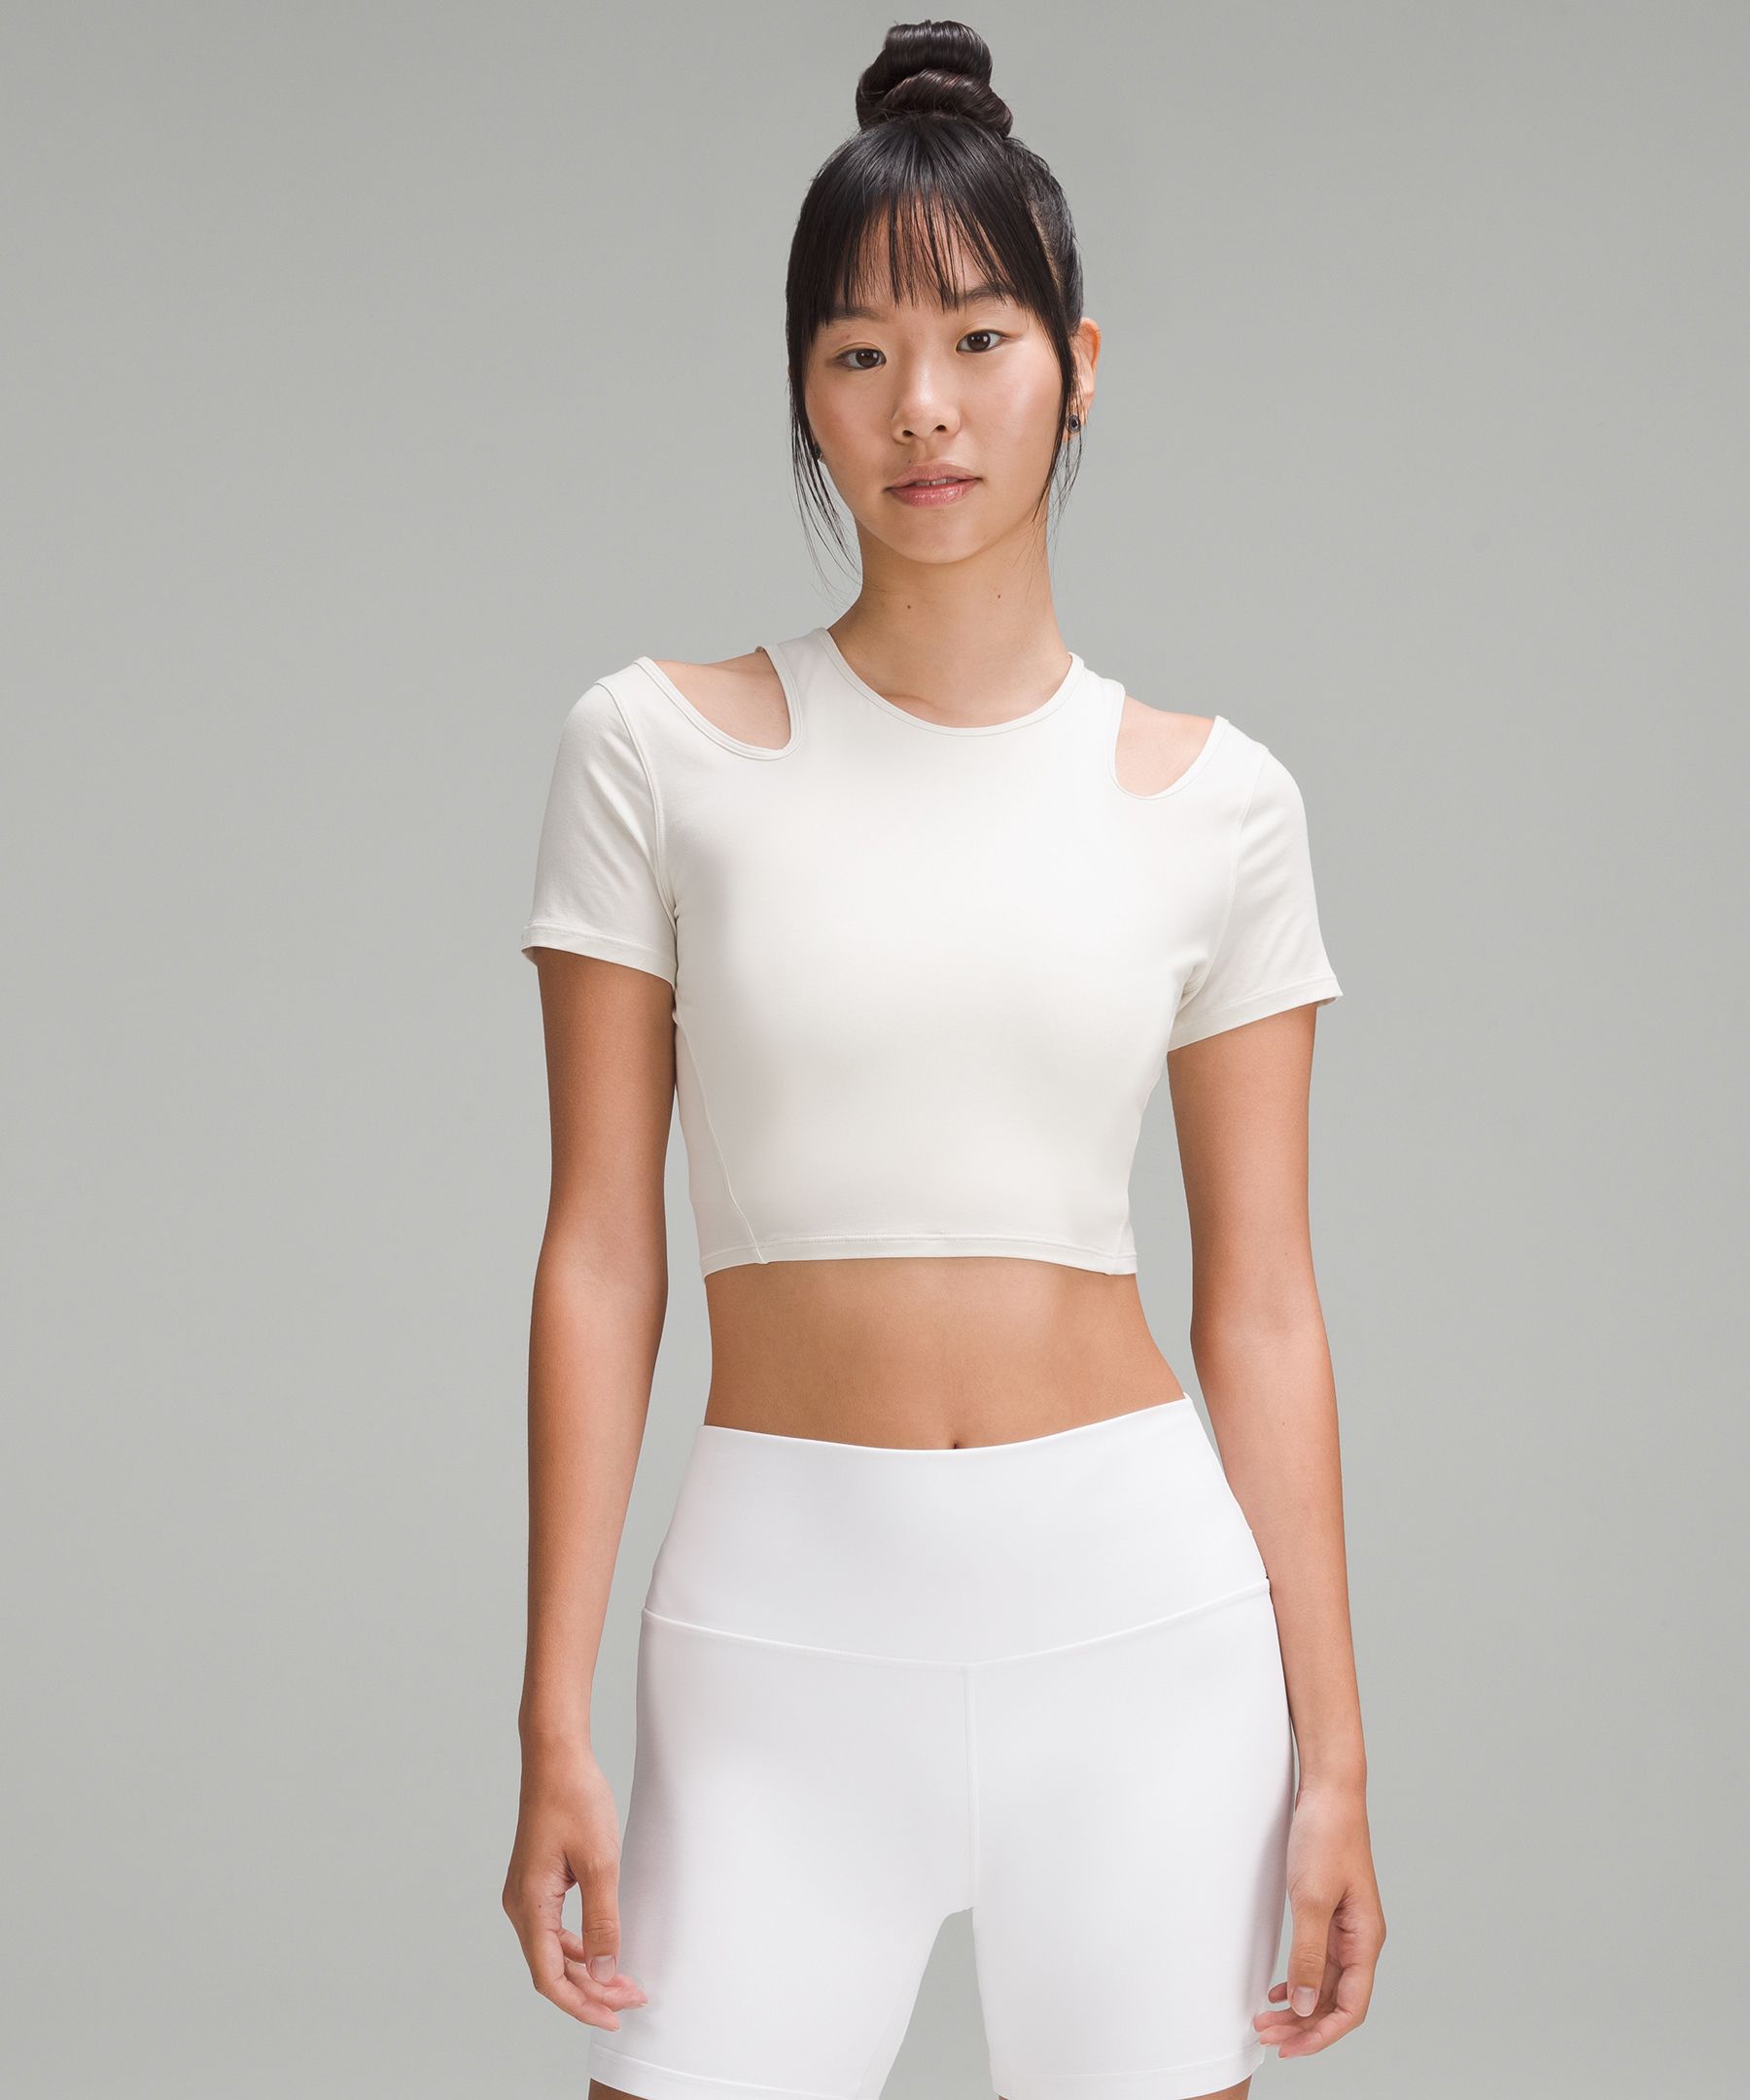 NEW Lululemon Shoulder Cut-Out Yoga T-Shirt Size 6 Black 